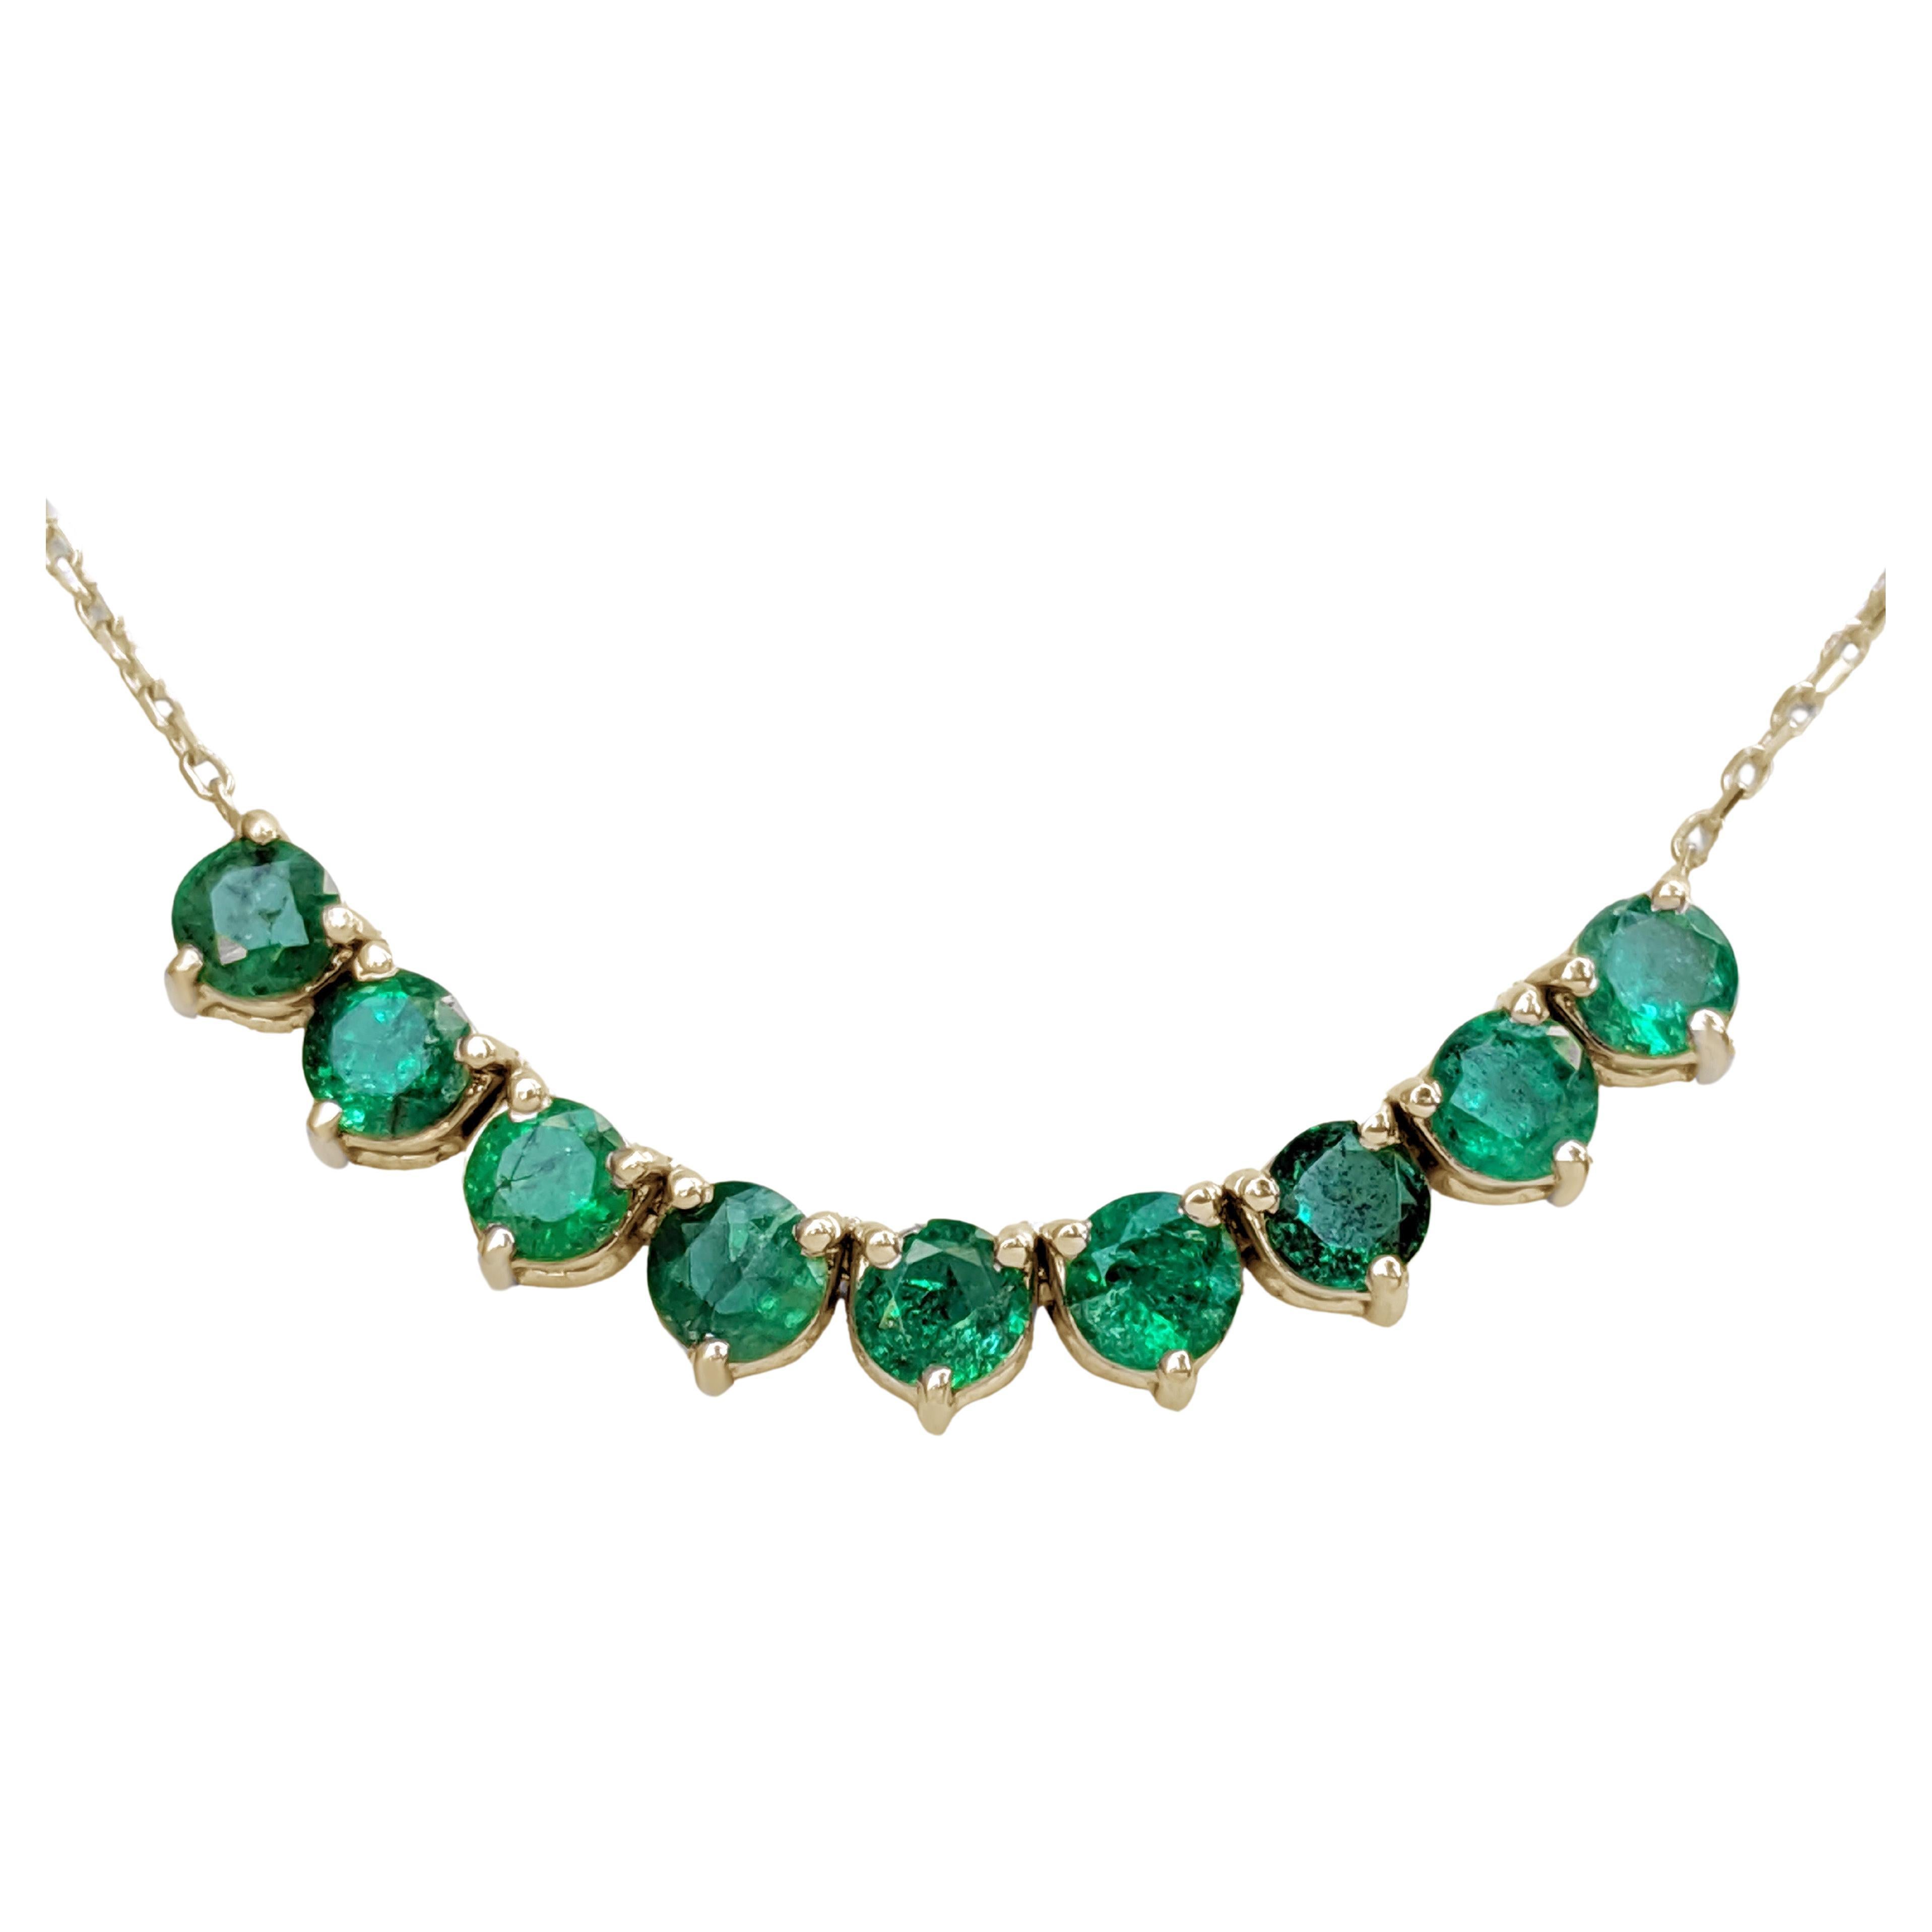 NO RESERVE! 1.47 Carat Natural Emerald Riviera - 14 kt. Gold - Necklace